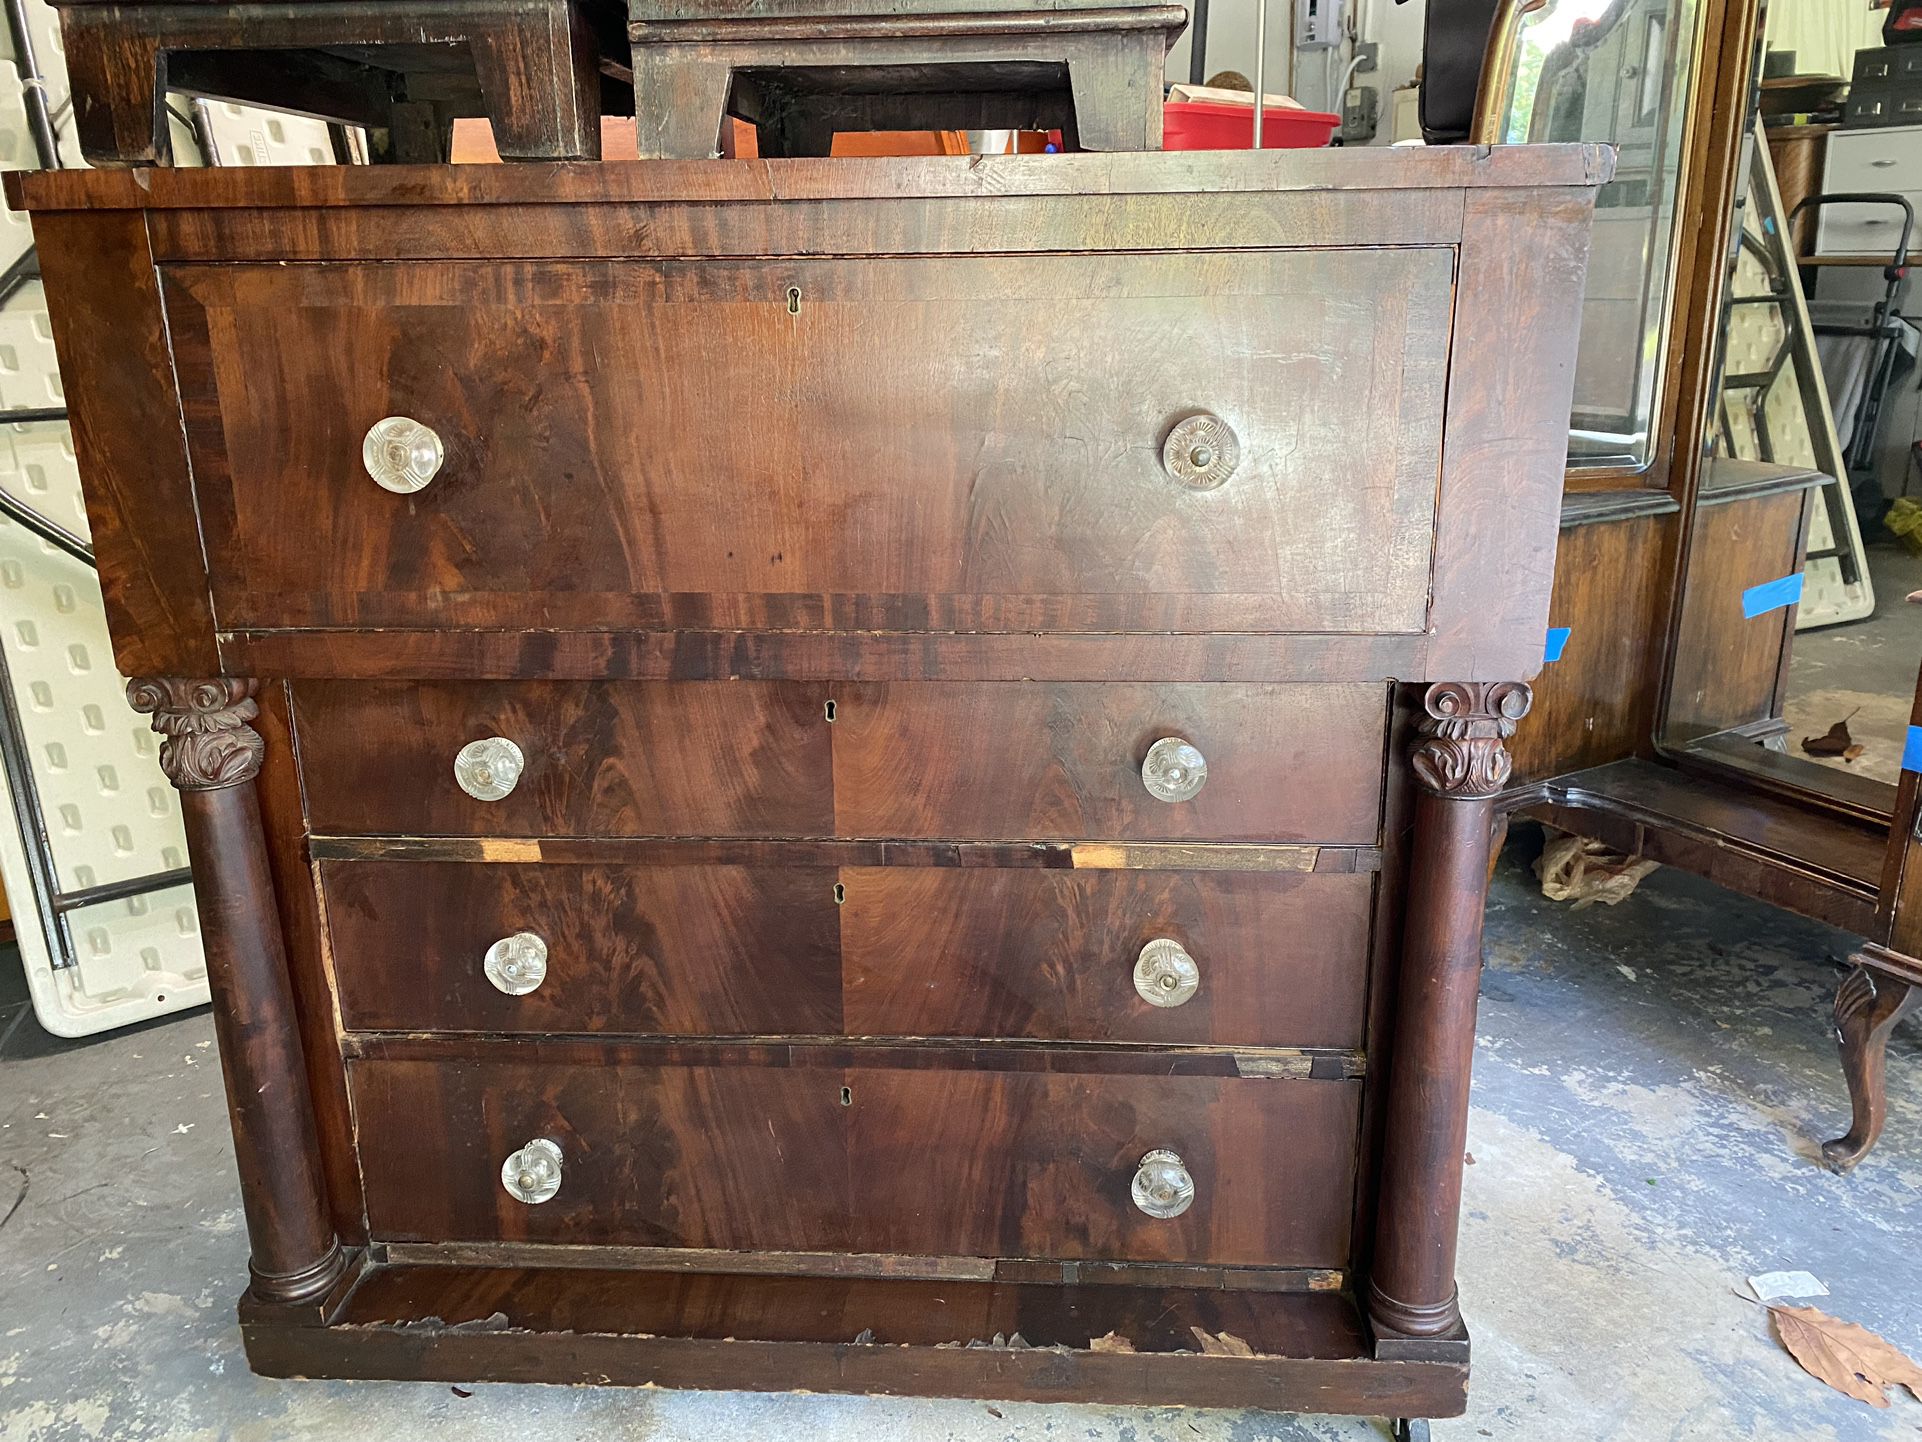 FREE Solid wood, antique dresser/desk/office chest